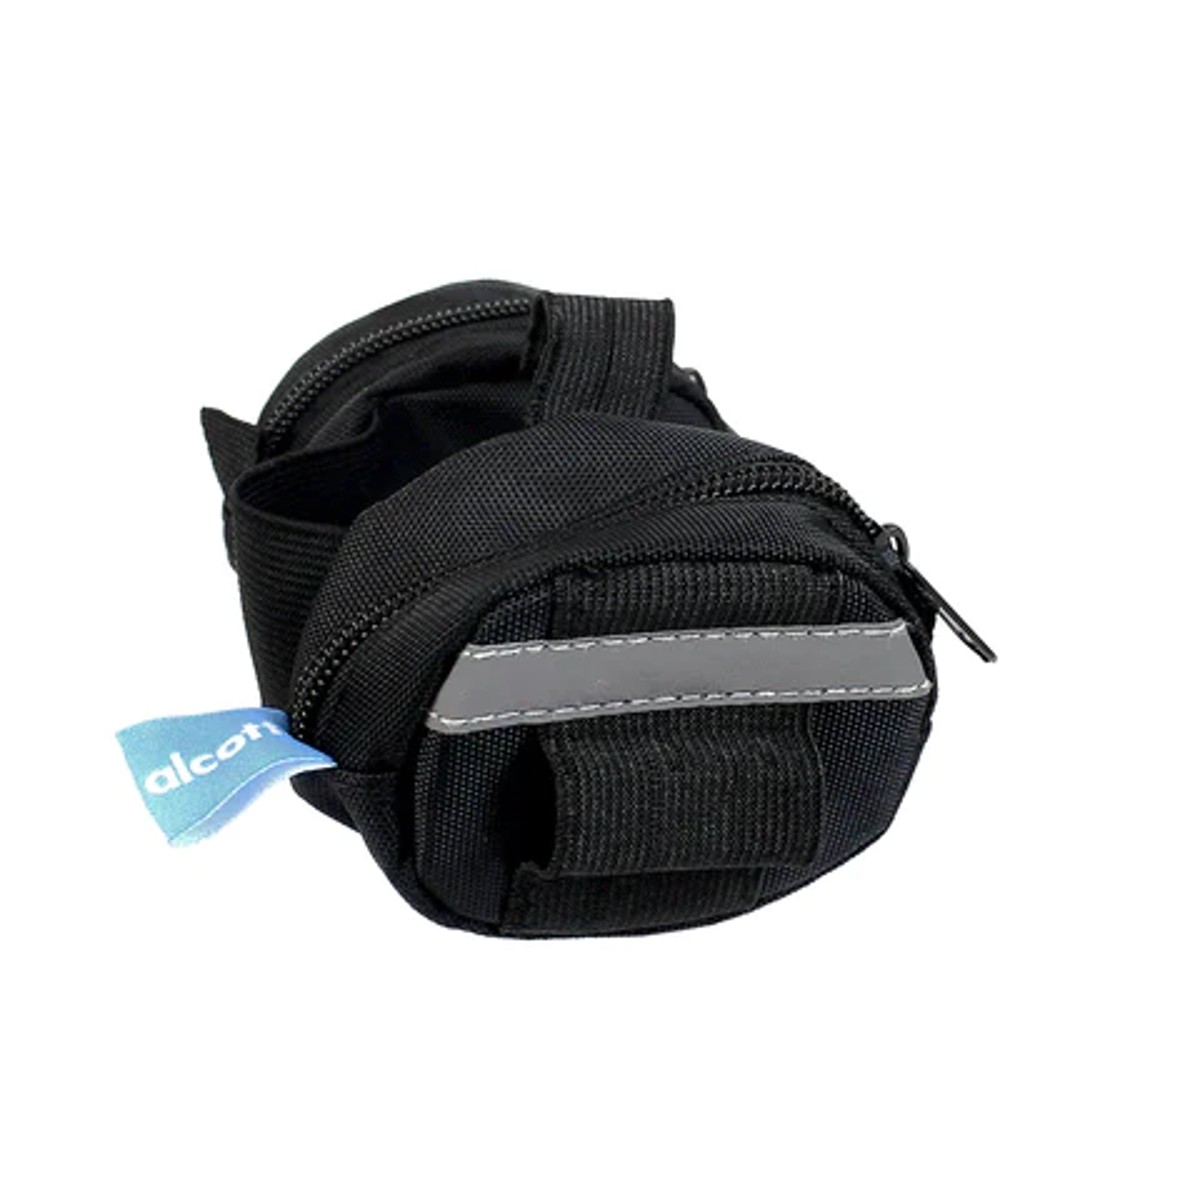 Alcott Retractable Leash Luggage Dog Bag - Black